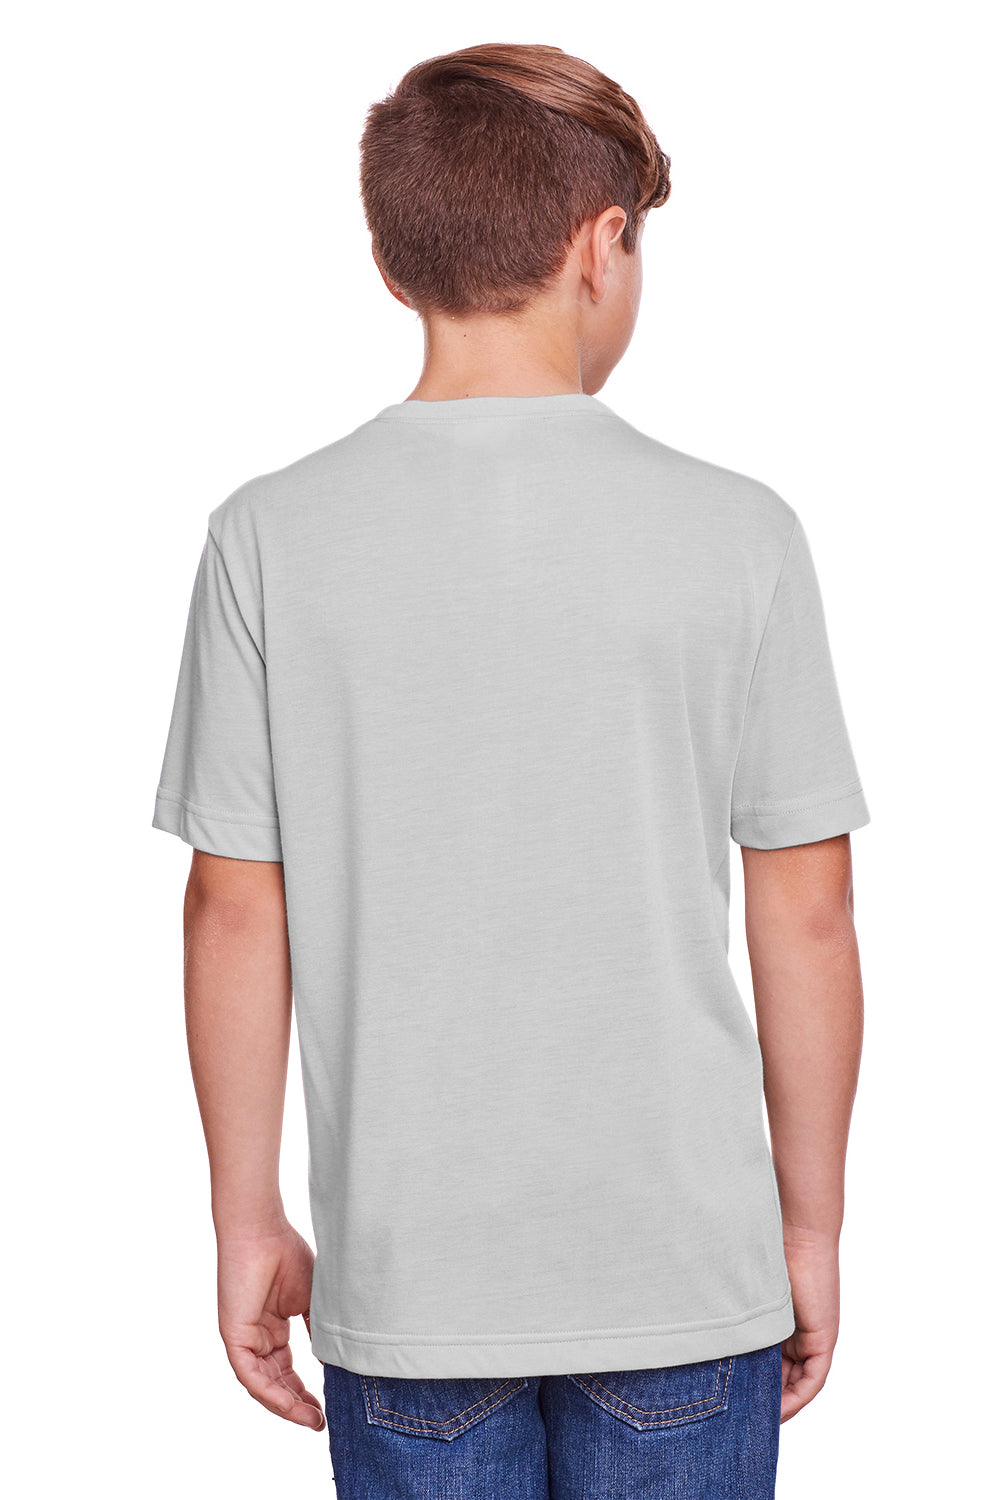 Core 365 CE111Y Youth Fusion ChromaSoft Performance Moisture Wicking Short Sleeve Crewneck T-Shirt Platinum Grey Back